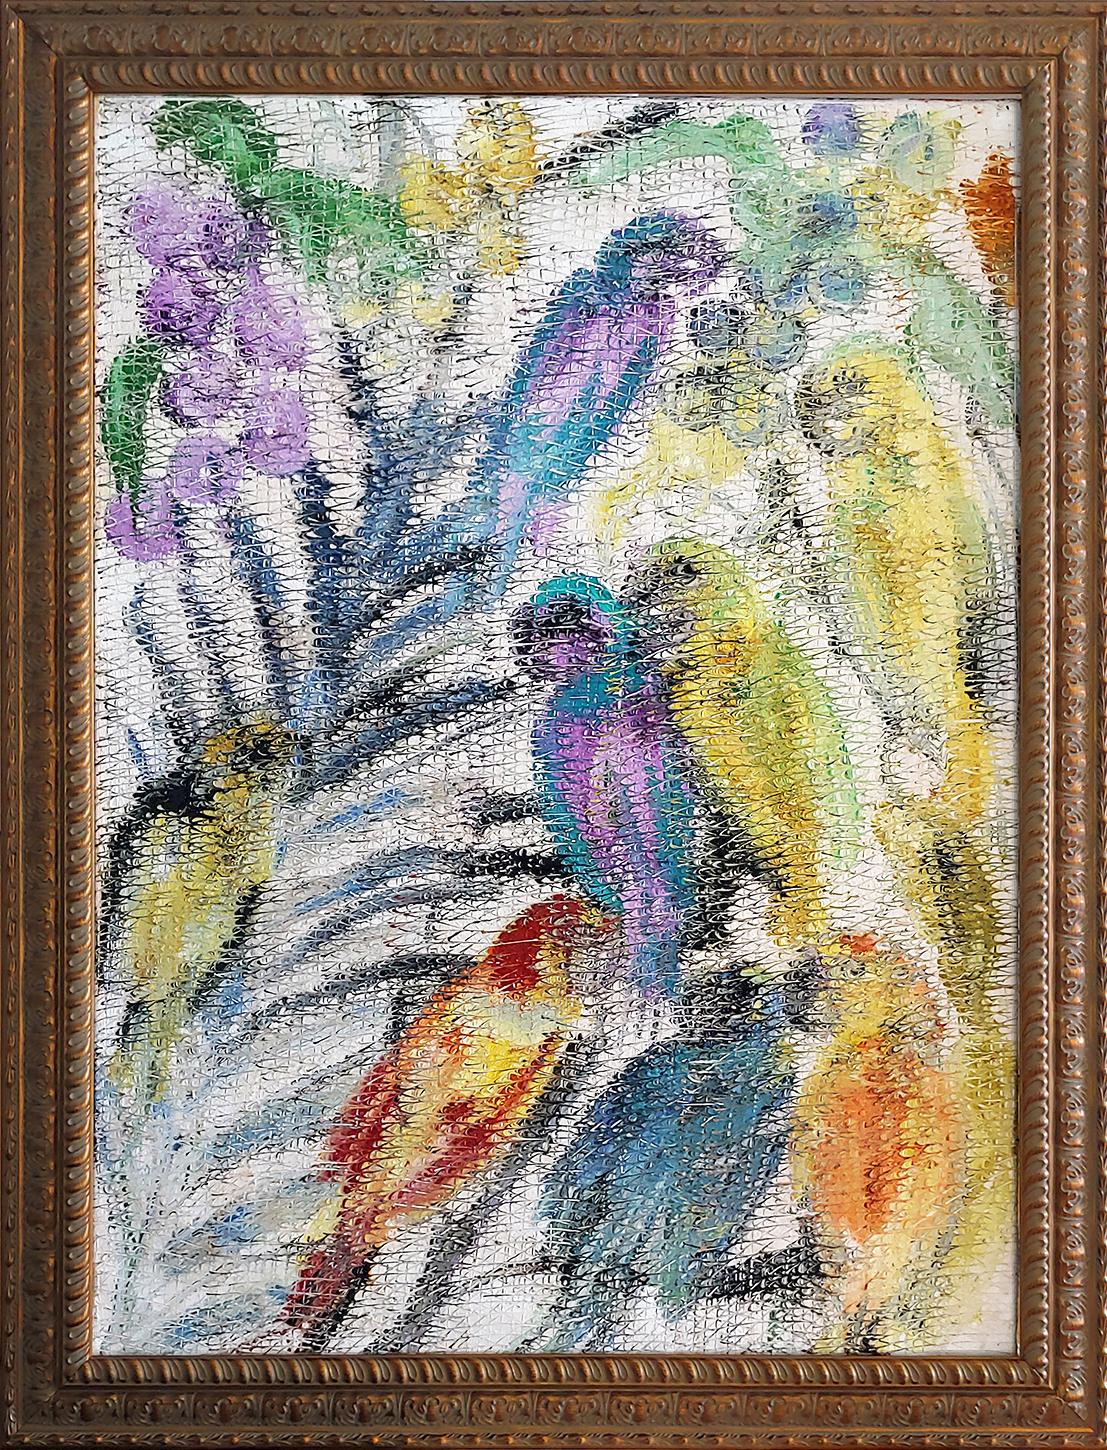 Hunt Slonem Animal Painting - "9 Parrots"  Large Oil on canvas framed size 46x36"